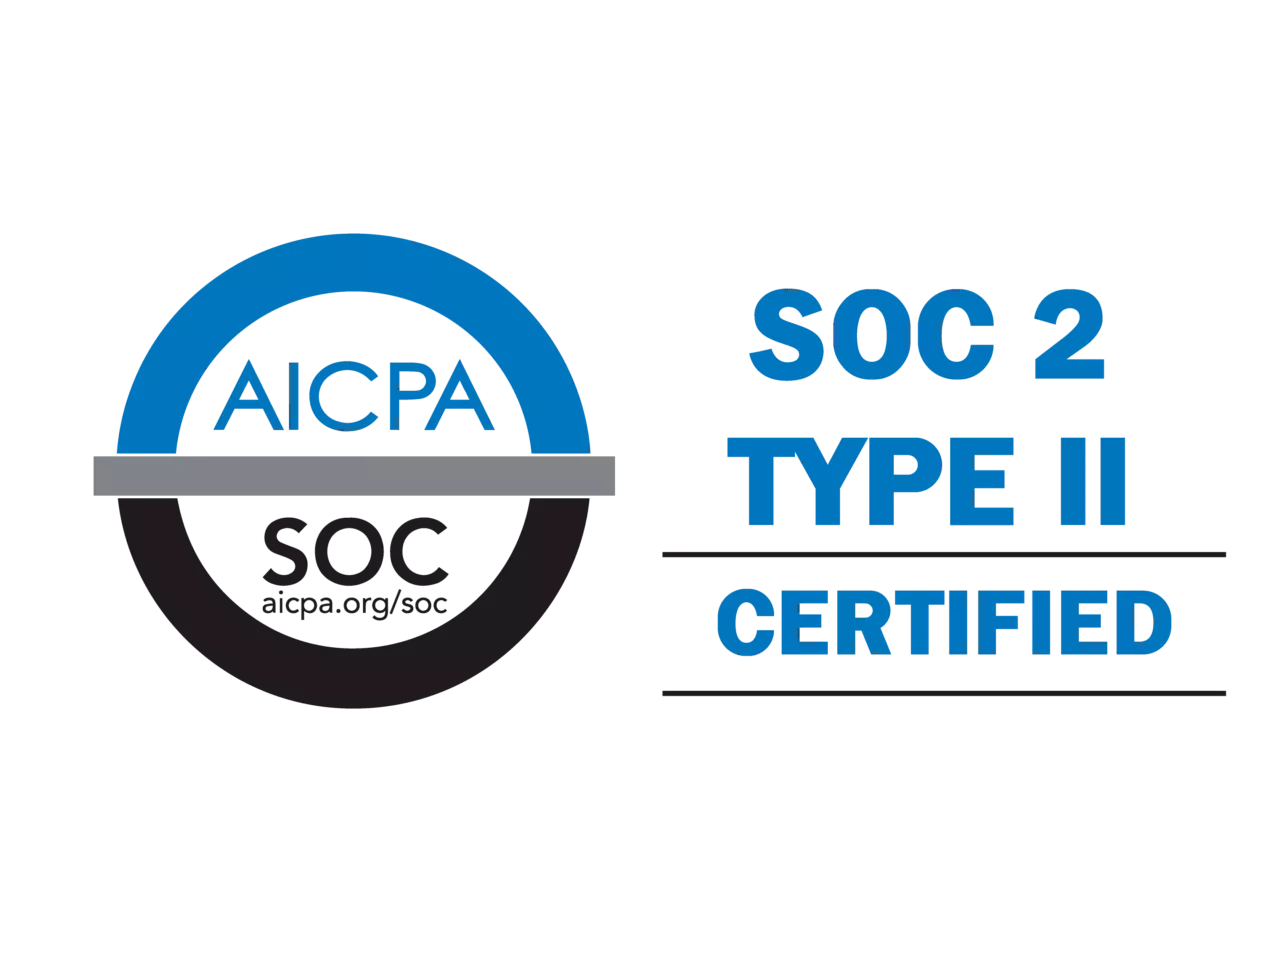 SOC 2 Type II Certified AICPA